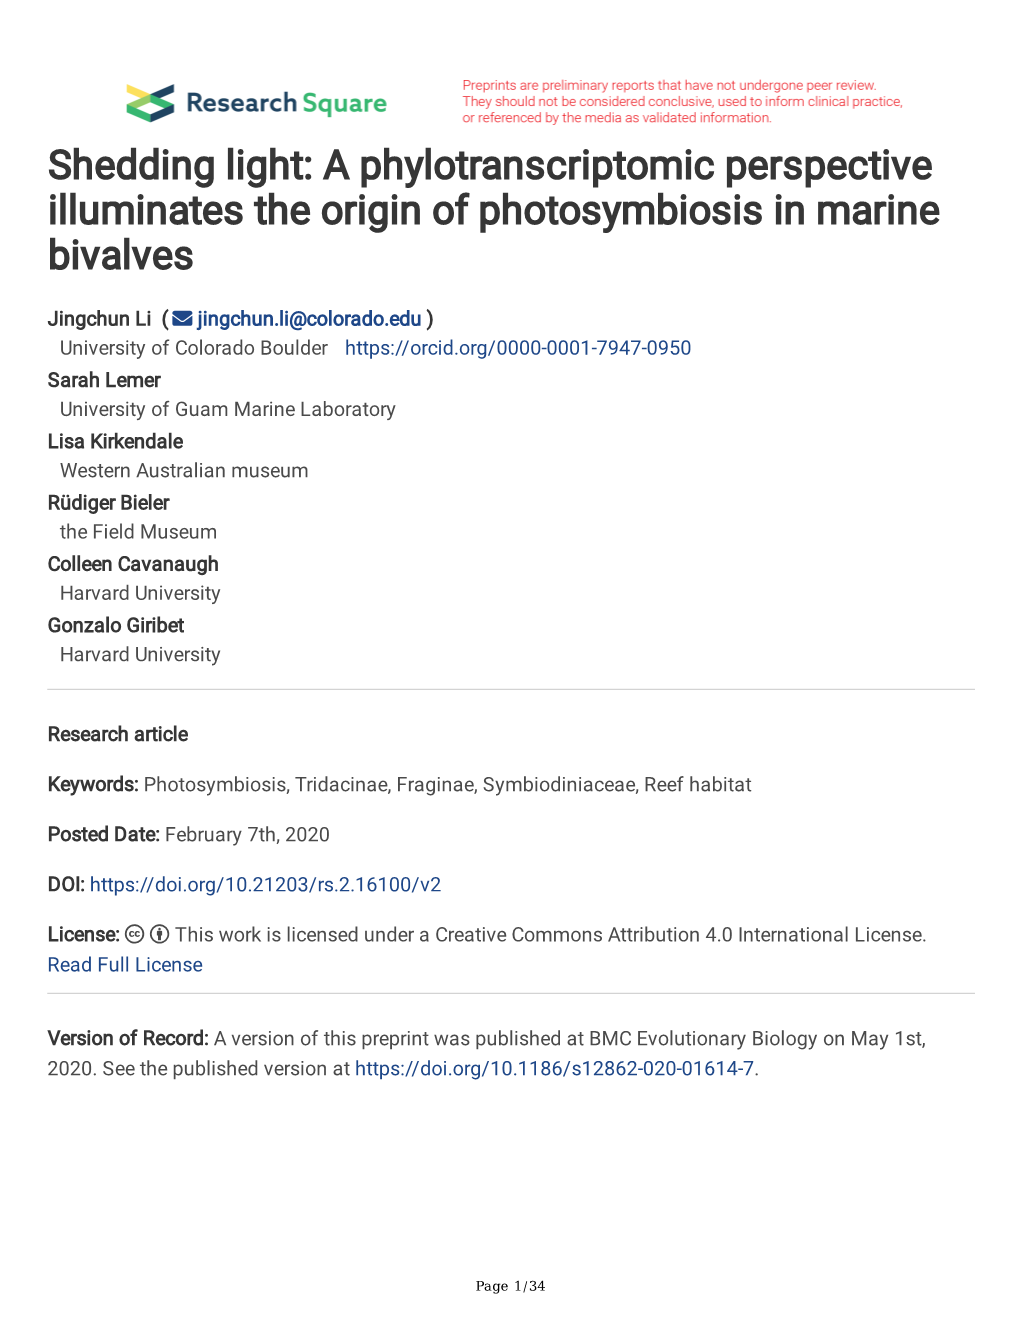 Shedding Light: a Phylotranscriptomic Perspective Illuminates the Origin of Photosymbiosis in Marine Bivalves